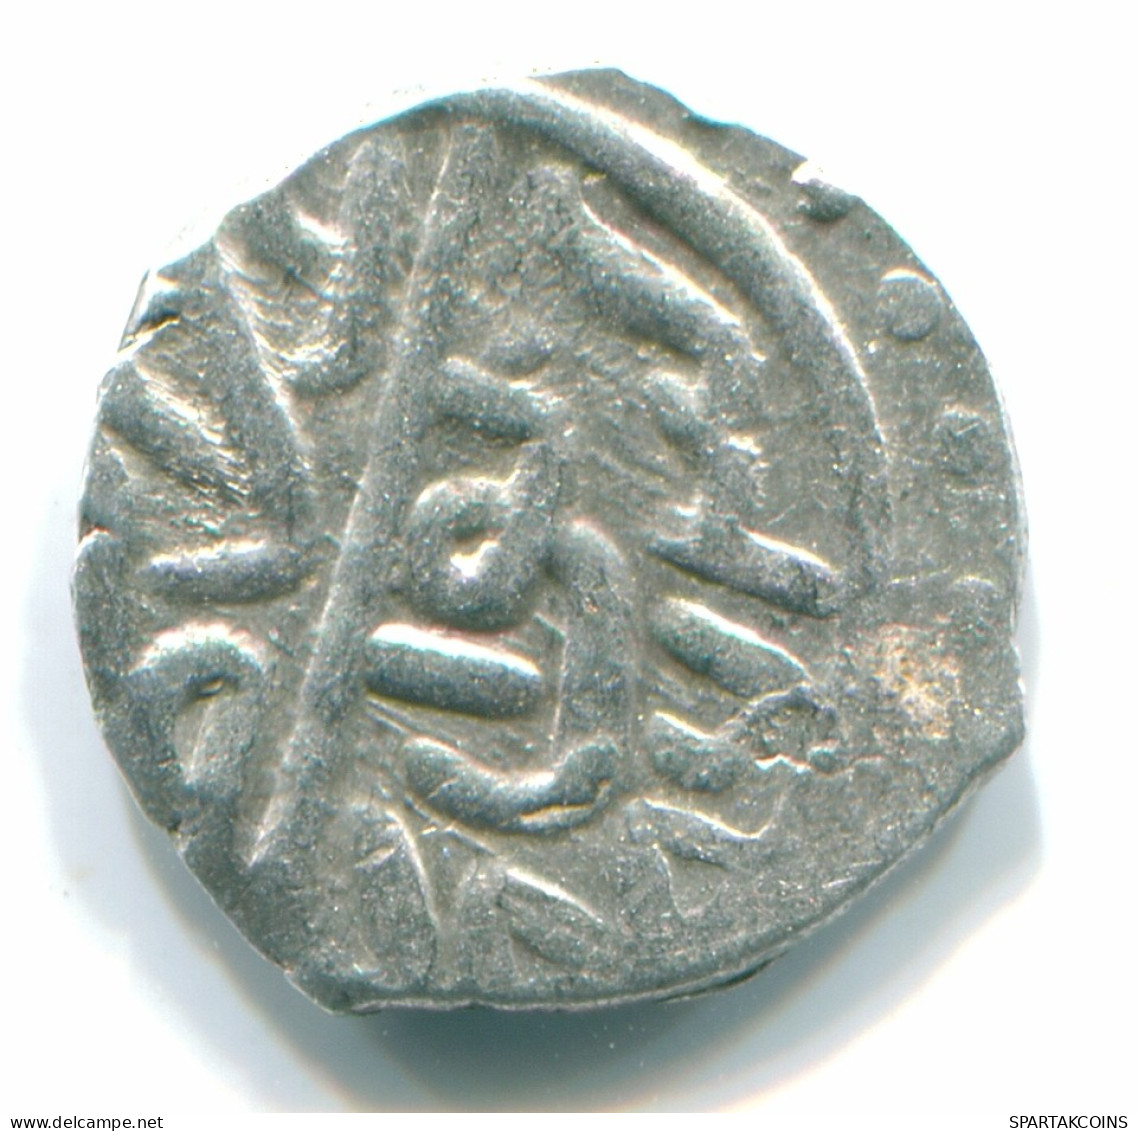 OTTOMAN EMPIRE BAYEZID II 1 Akce 1481-1512 AD Silver Islamic Coin #MED10038.7.D.A - Islamic